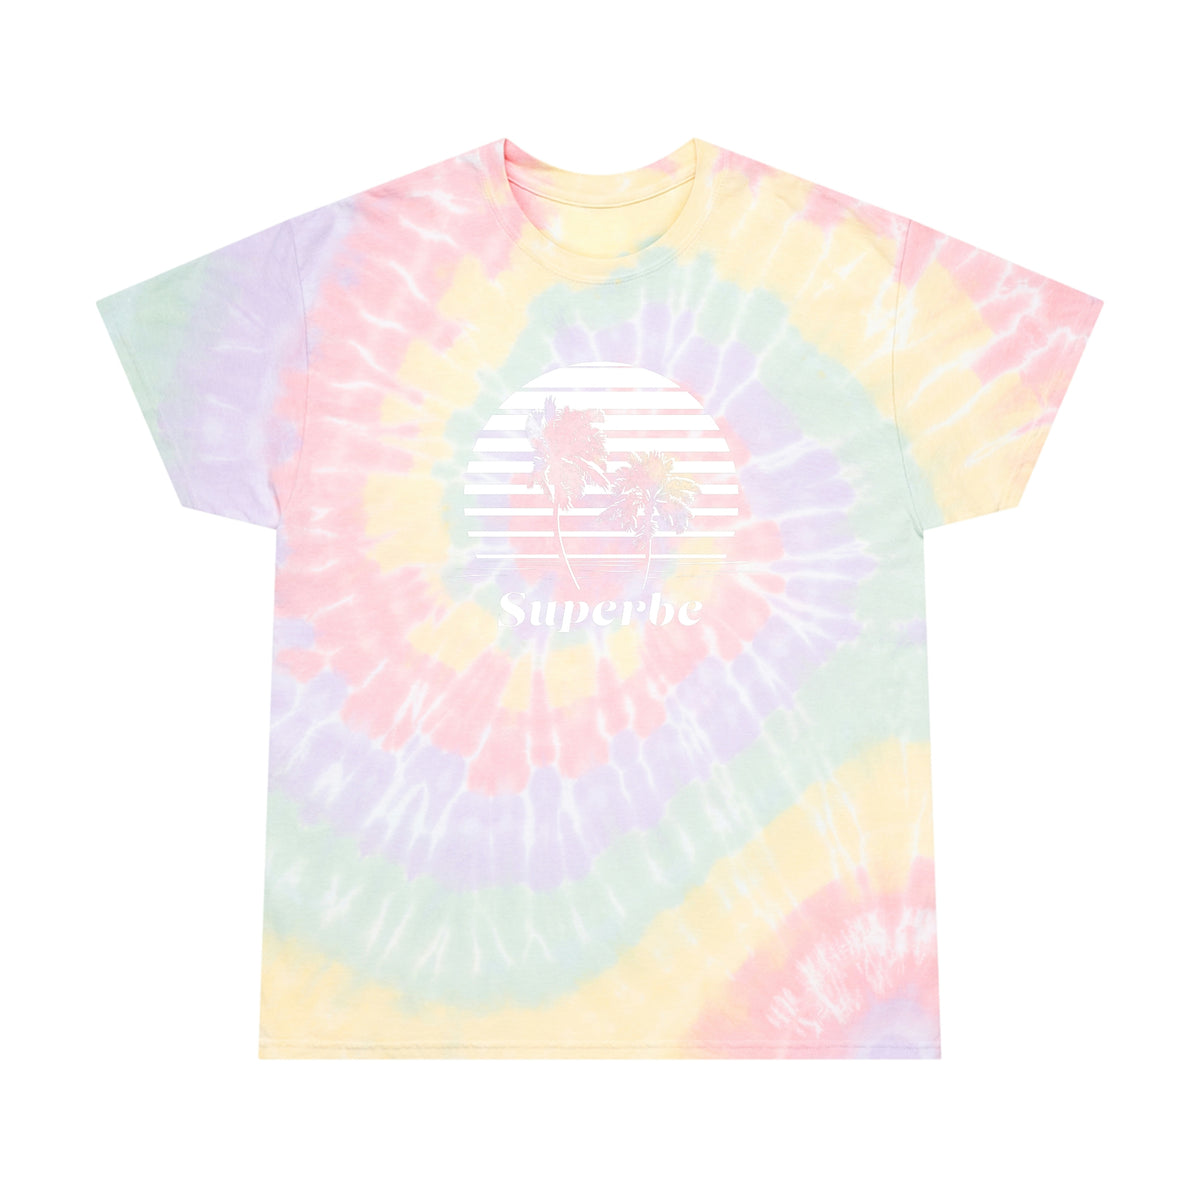 Superbe Sunset Spiral Tie-Dye T-Shirt